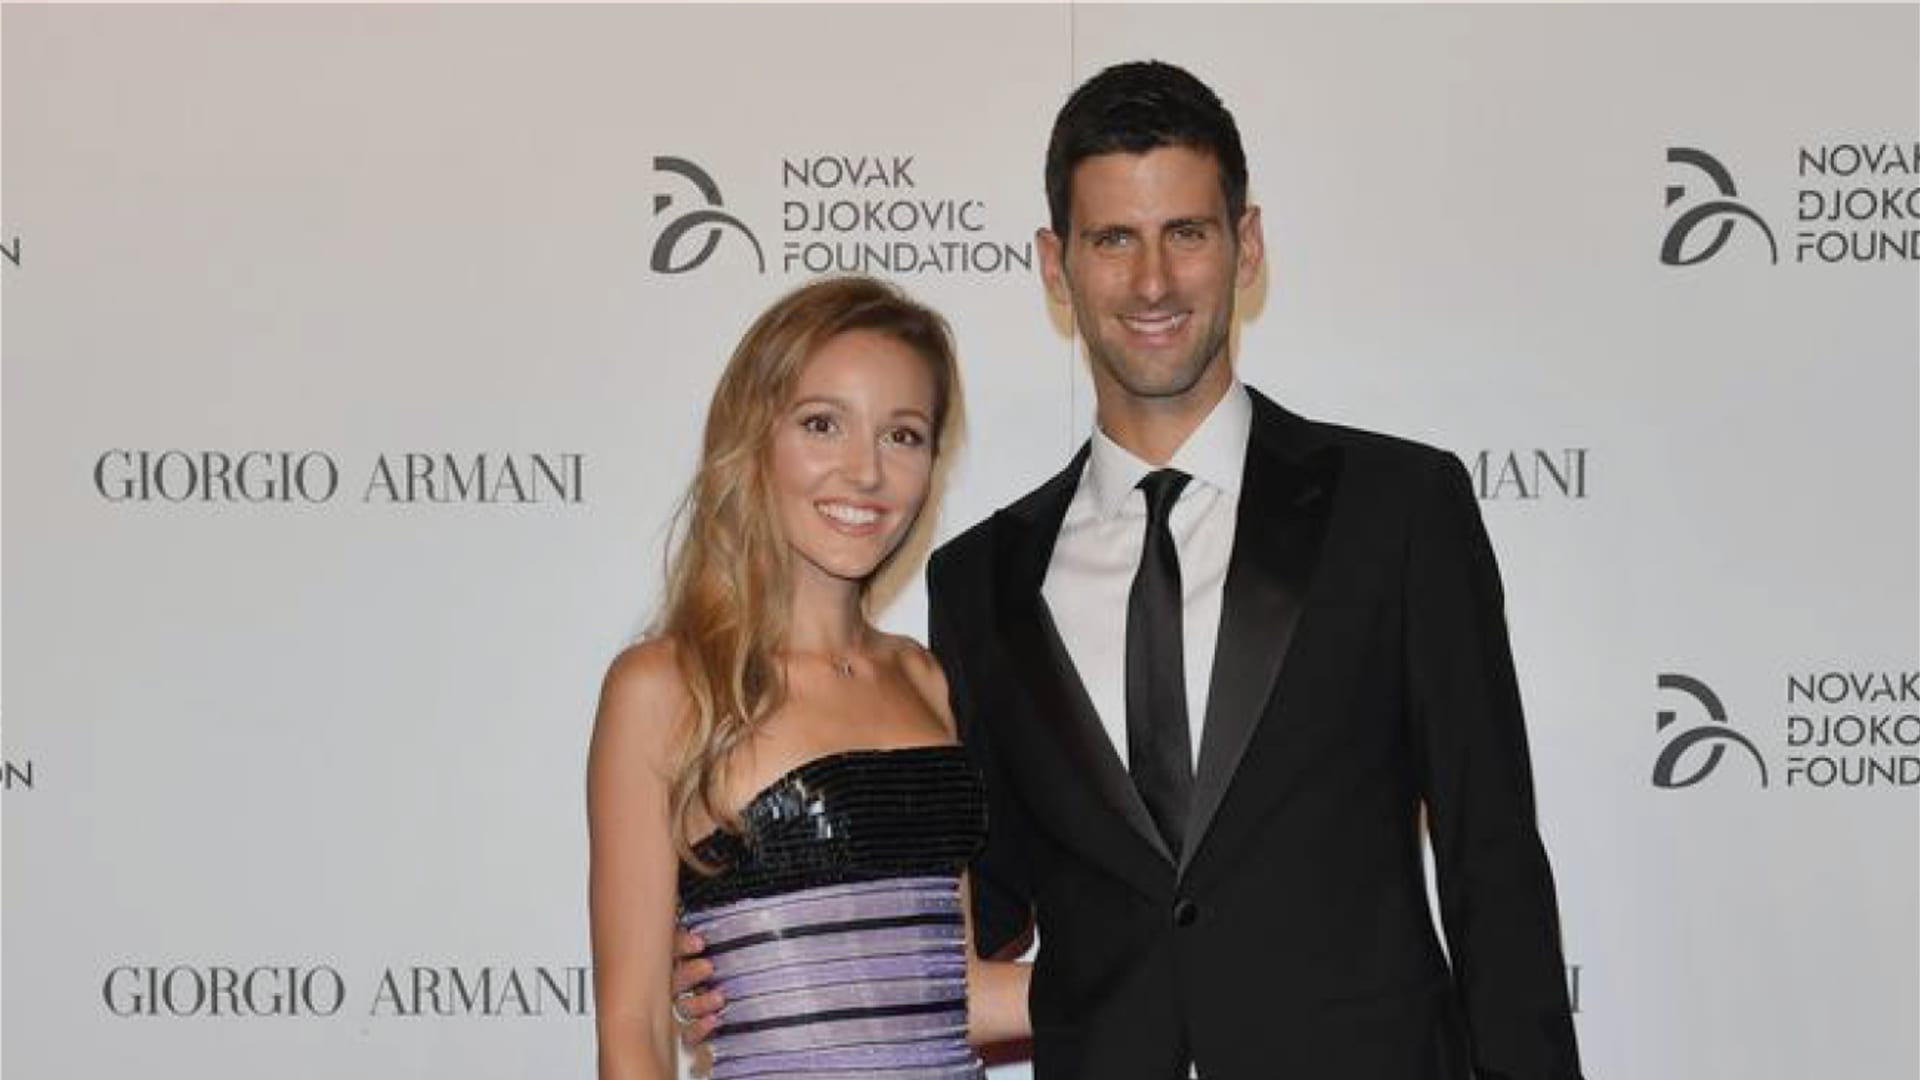 Stars flock to Novak Djokovic Foundation gala